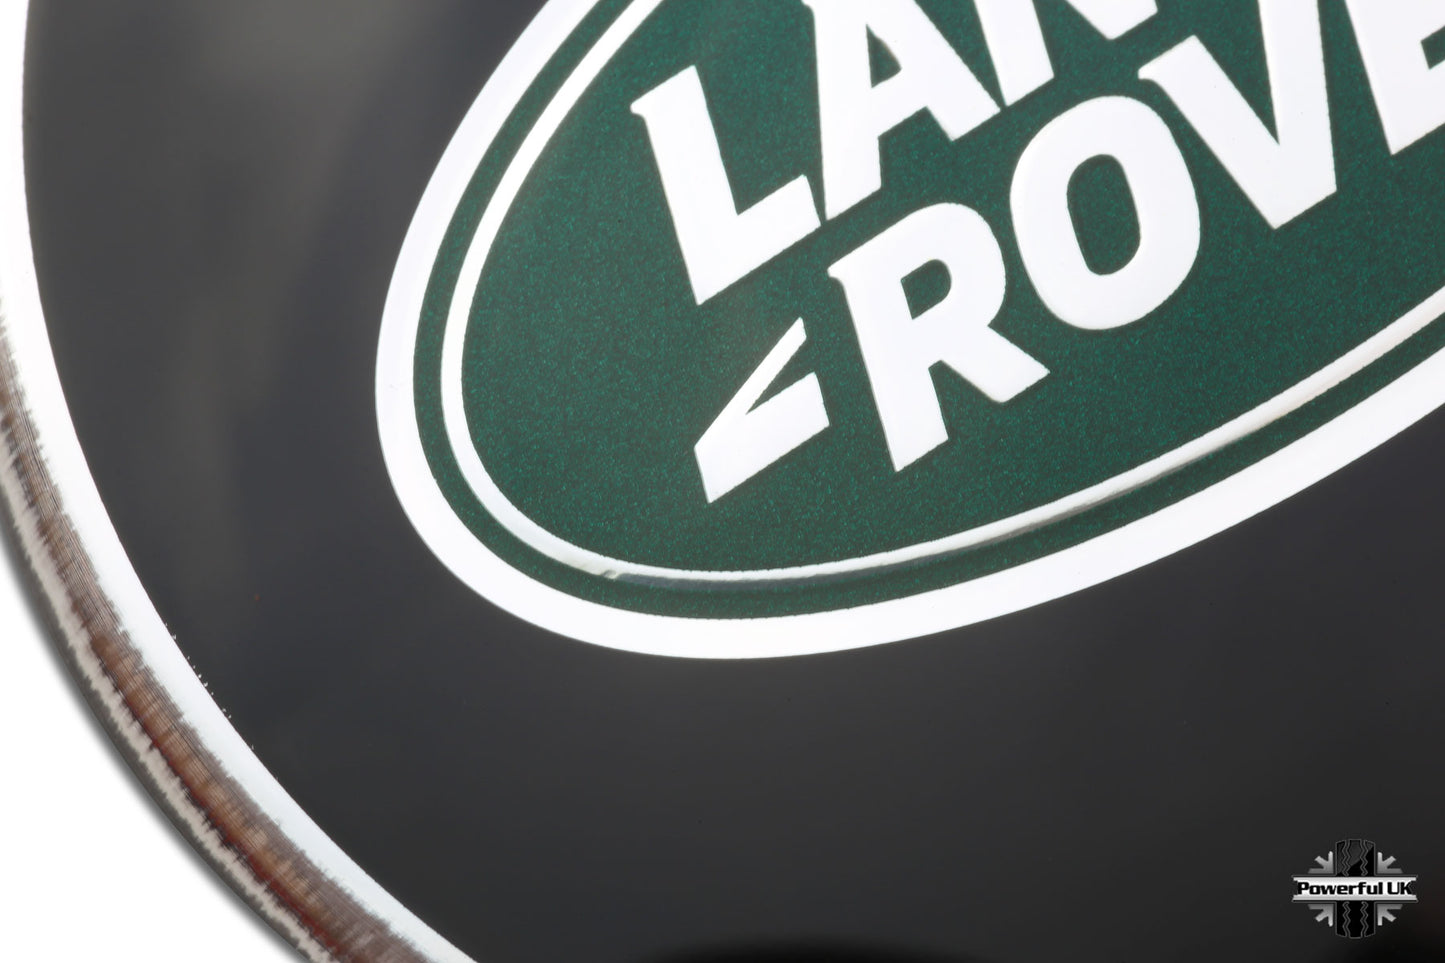 Genuine 4x Black Green Alloy Wheel Center Centre Caps for Land Rover Defender